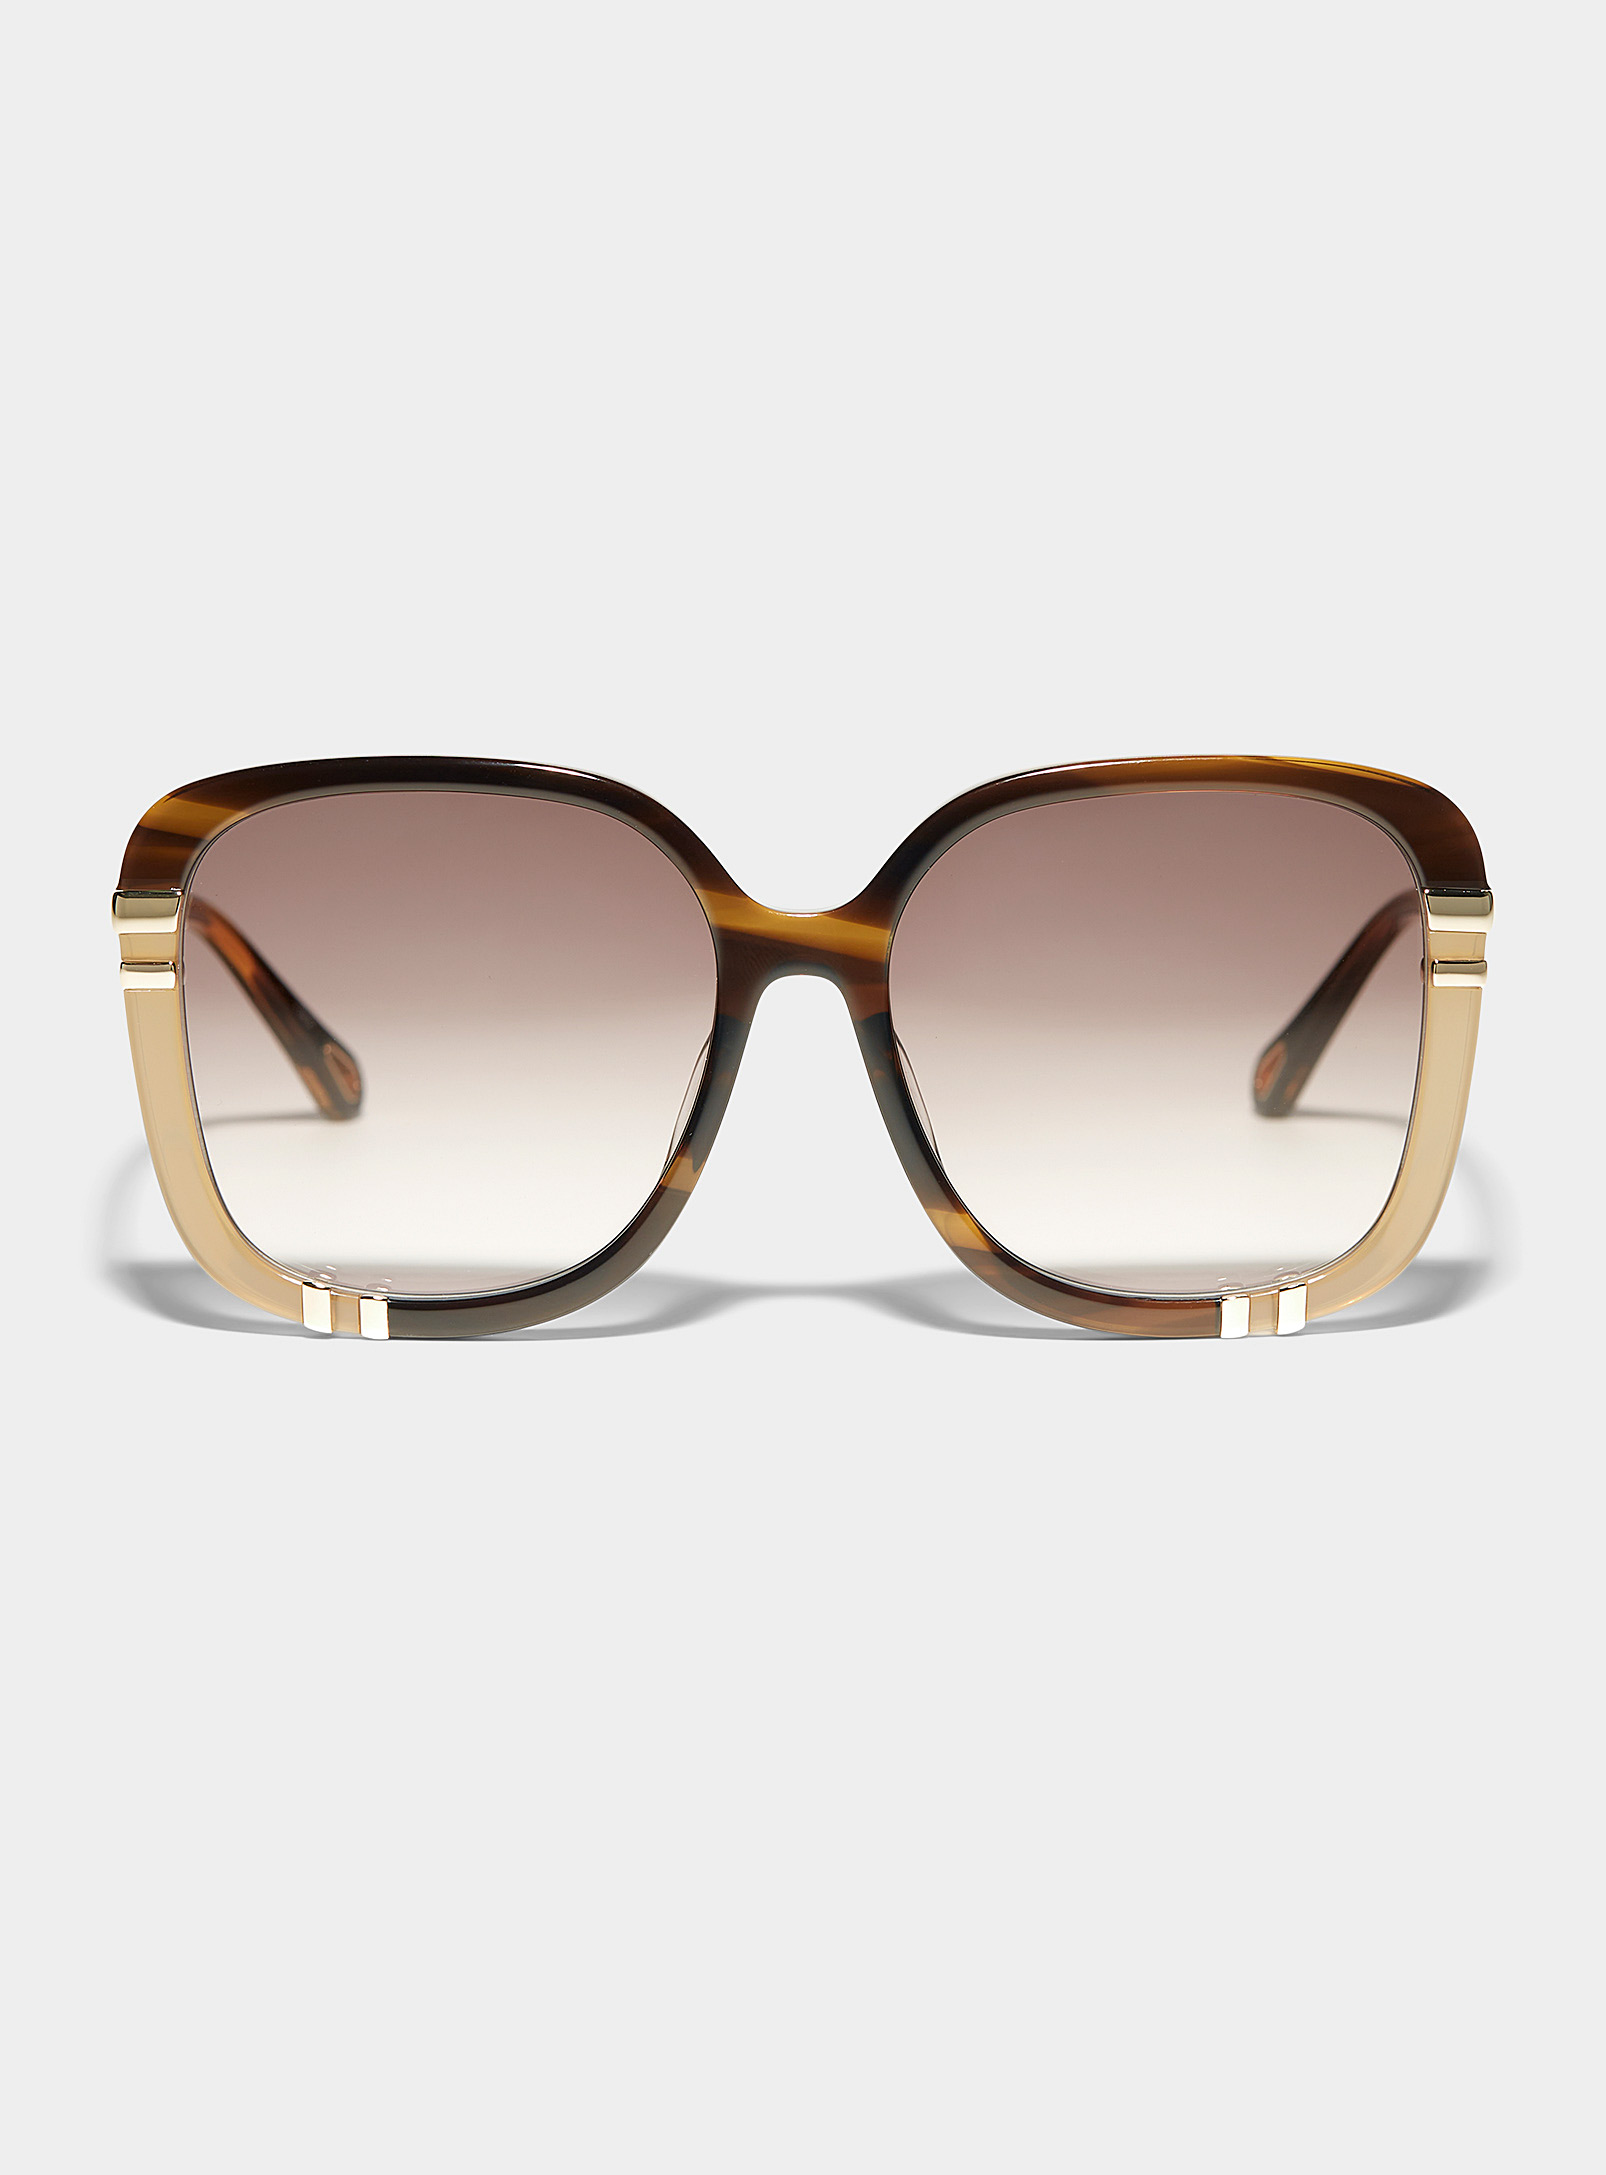 Chloé West Massive Sunglasses In Medium Brown